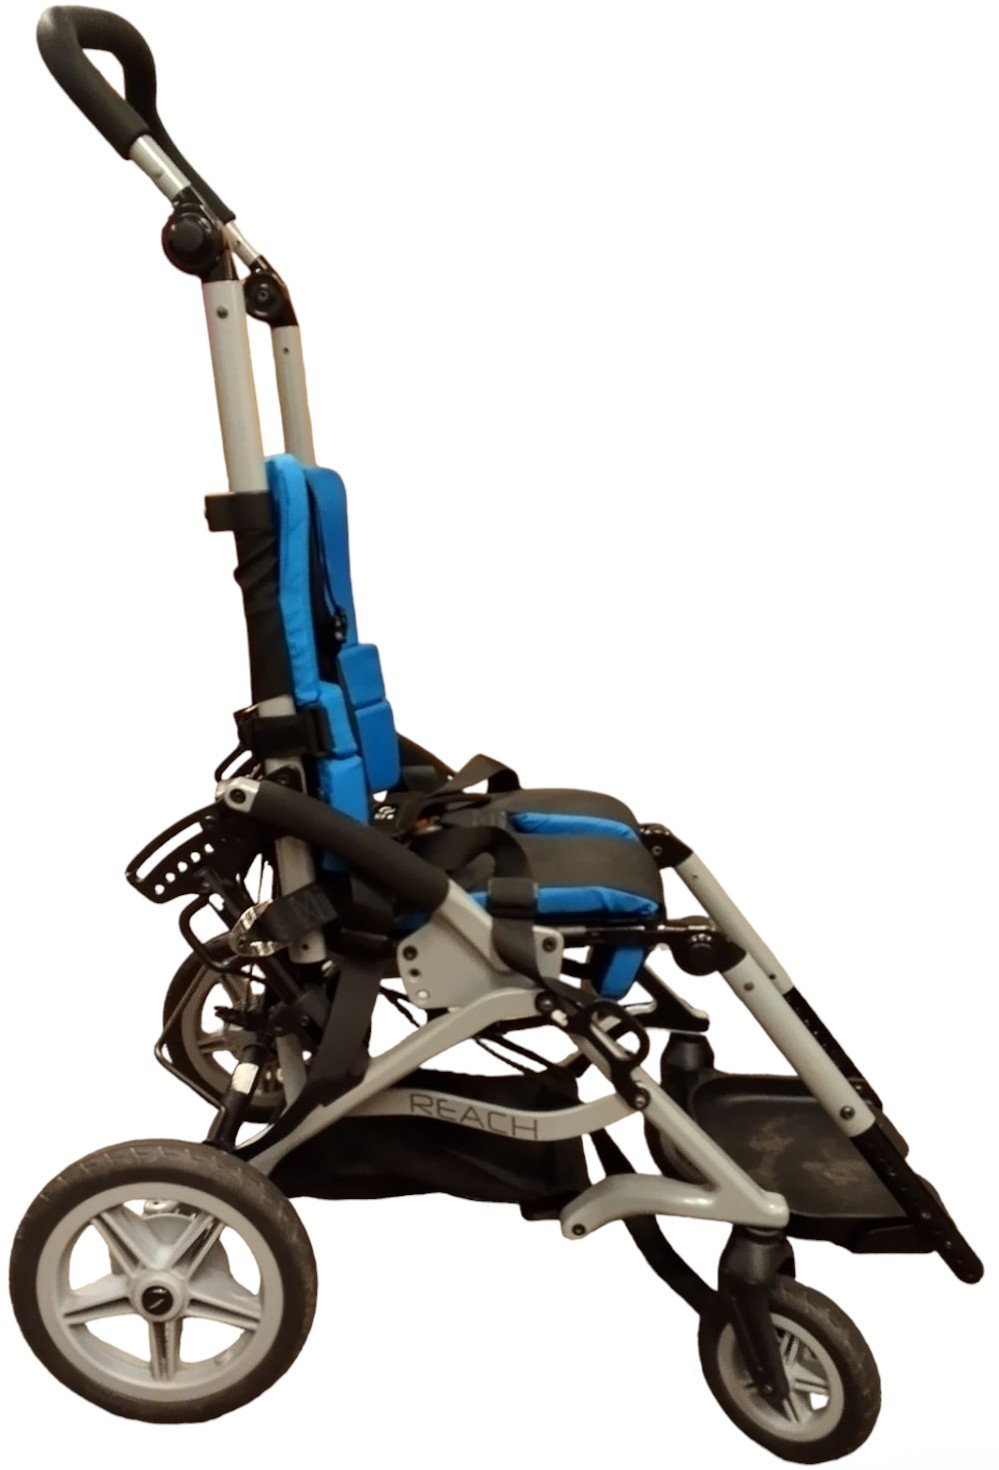 Thumbnail of Leggero Reach 14 - Wheelchair/Stroller.